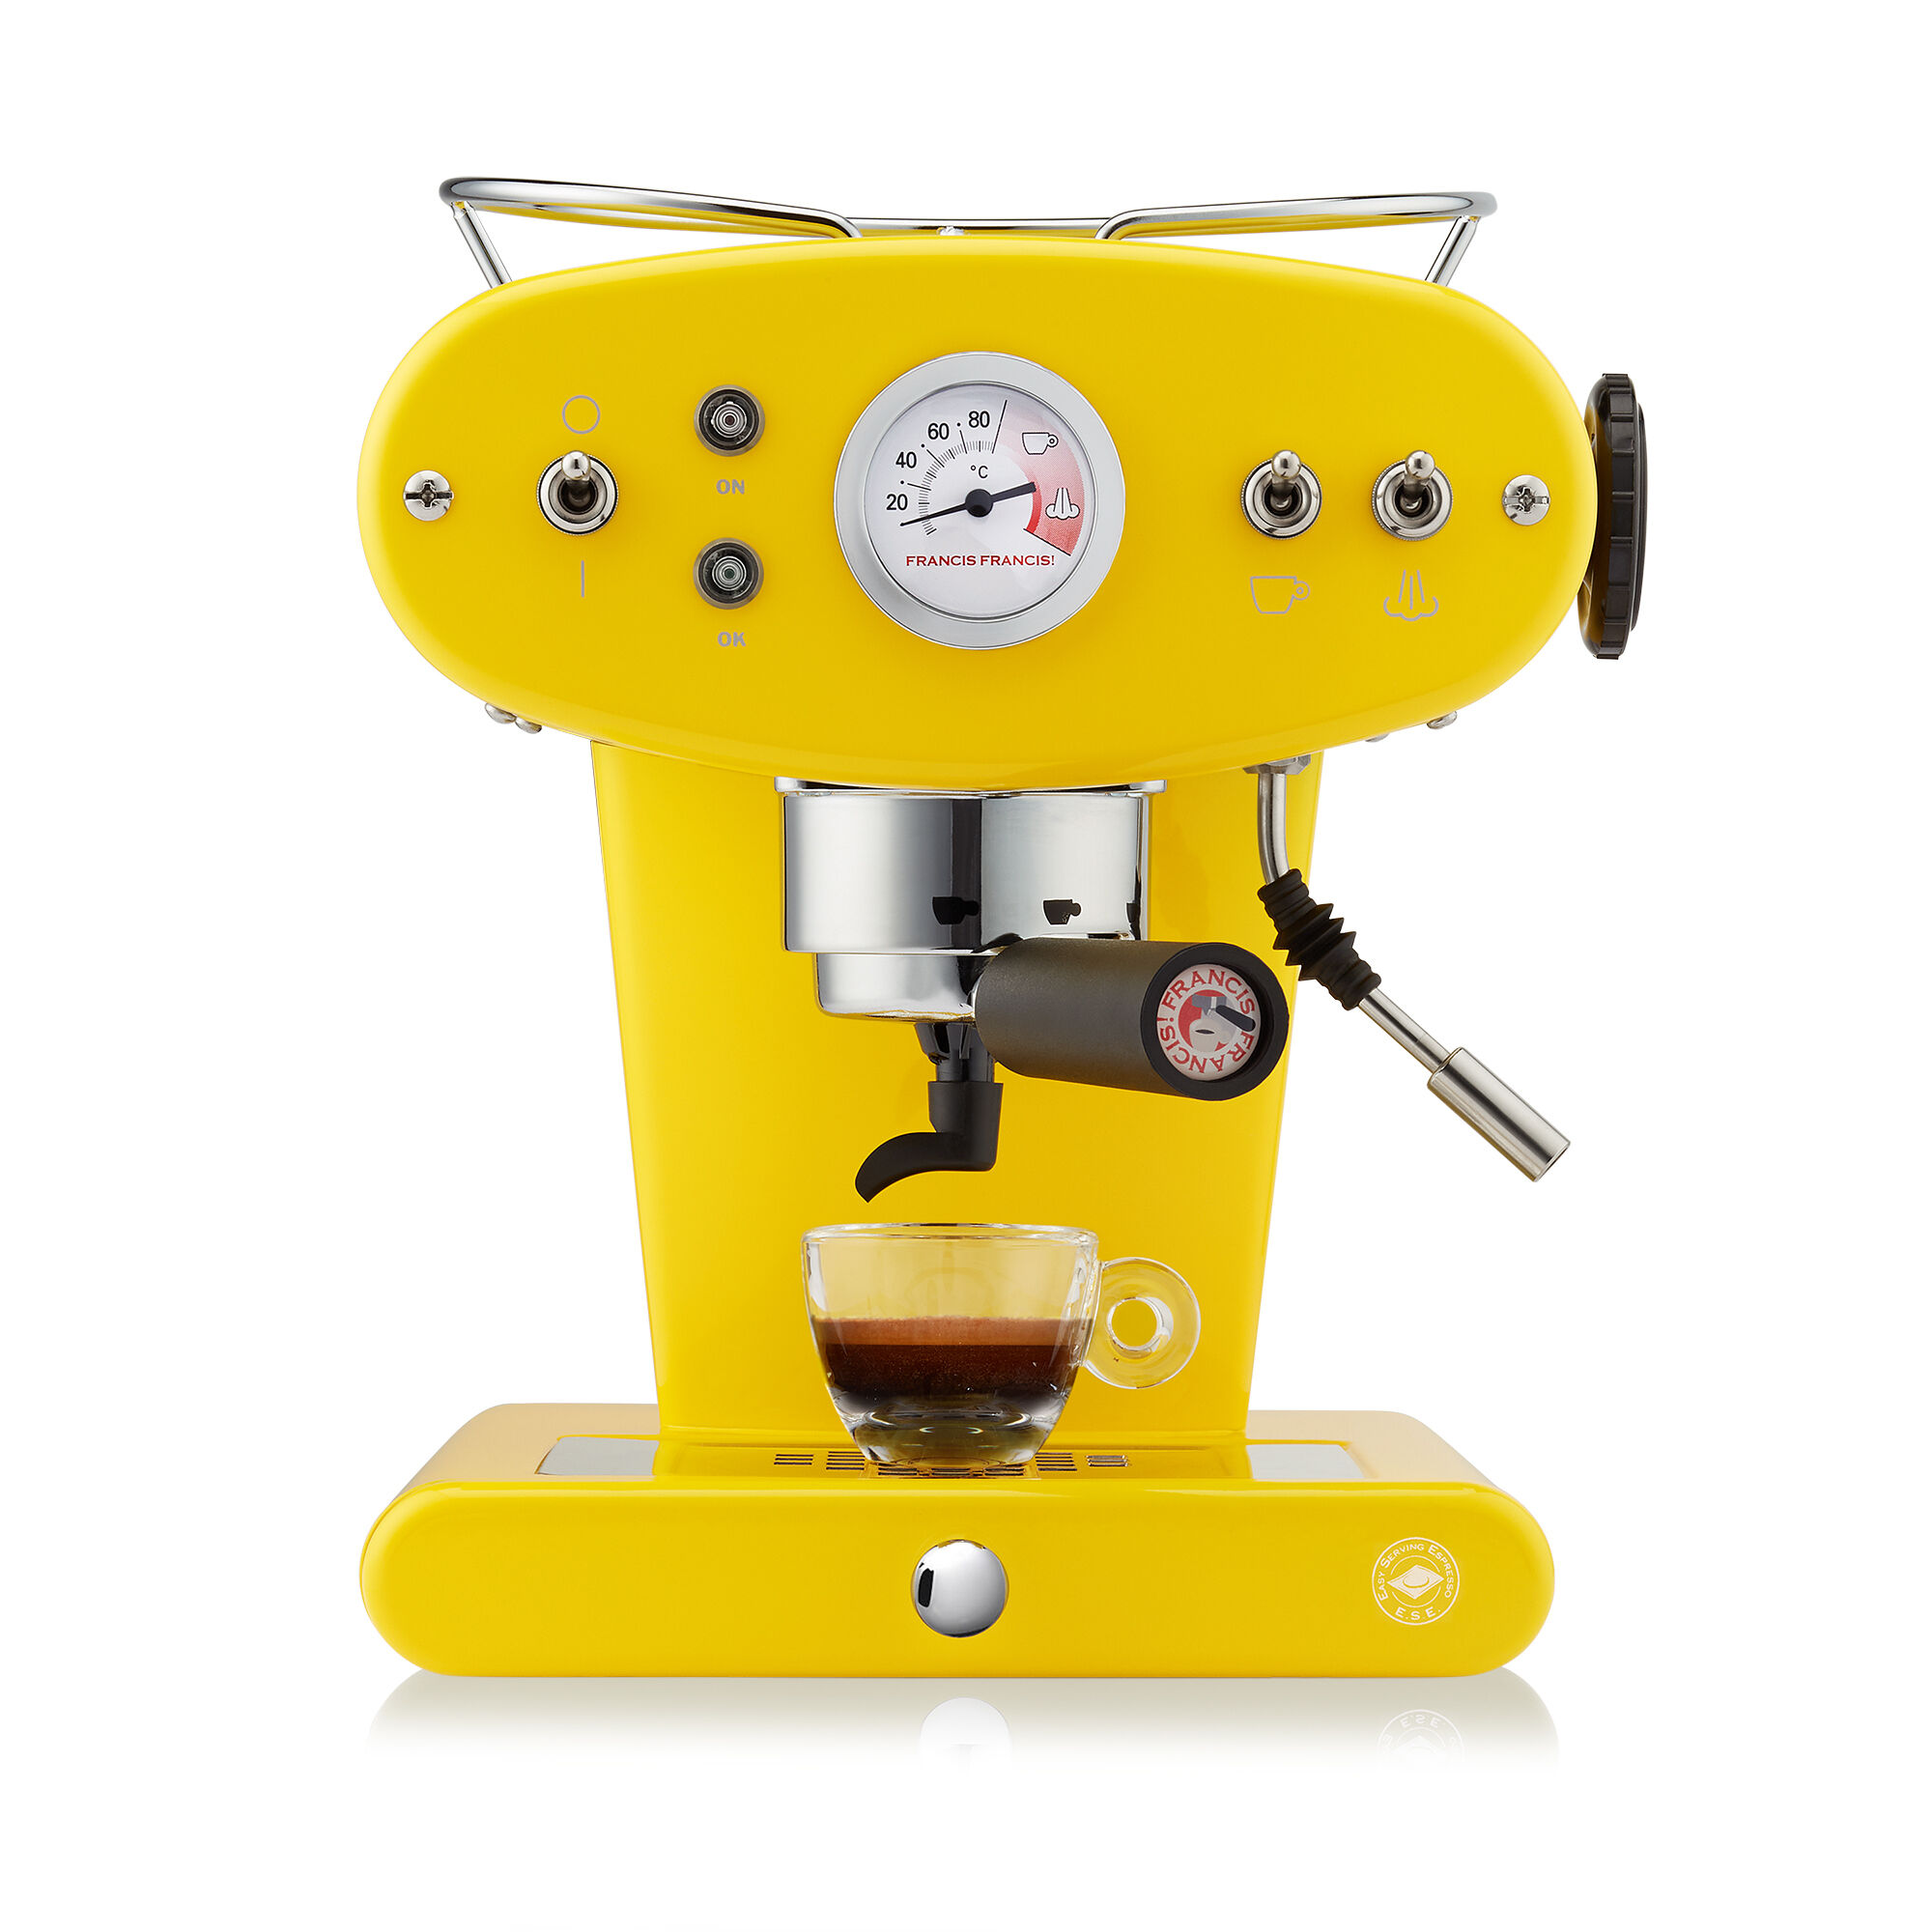 X1 Trio geel - Koffiemachine voor E.S.E servings koffiepads 